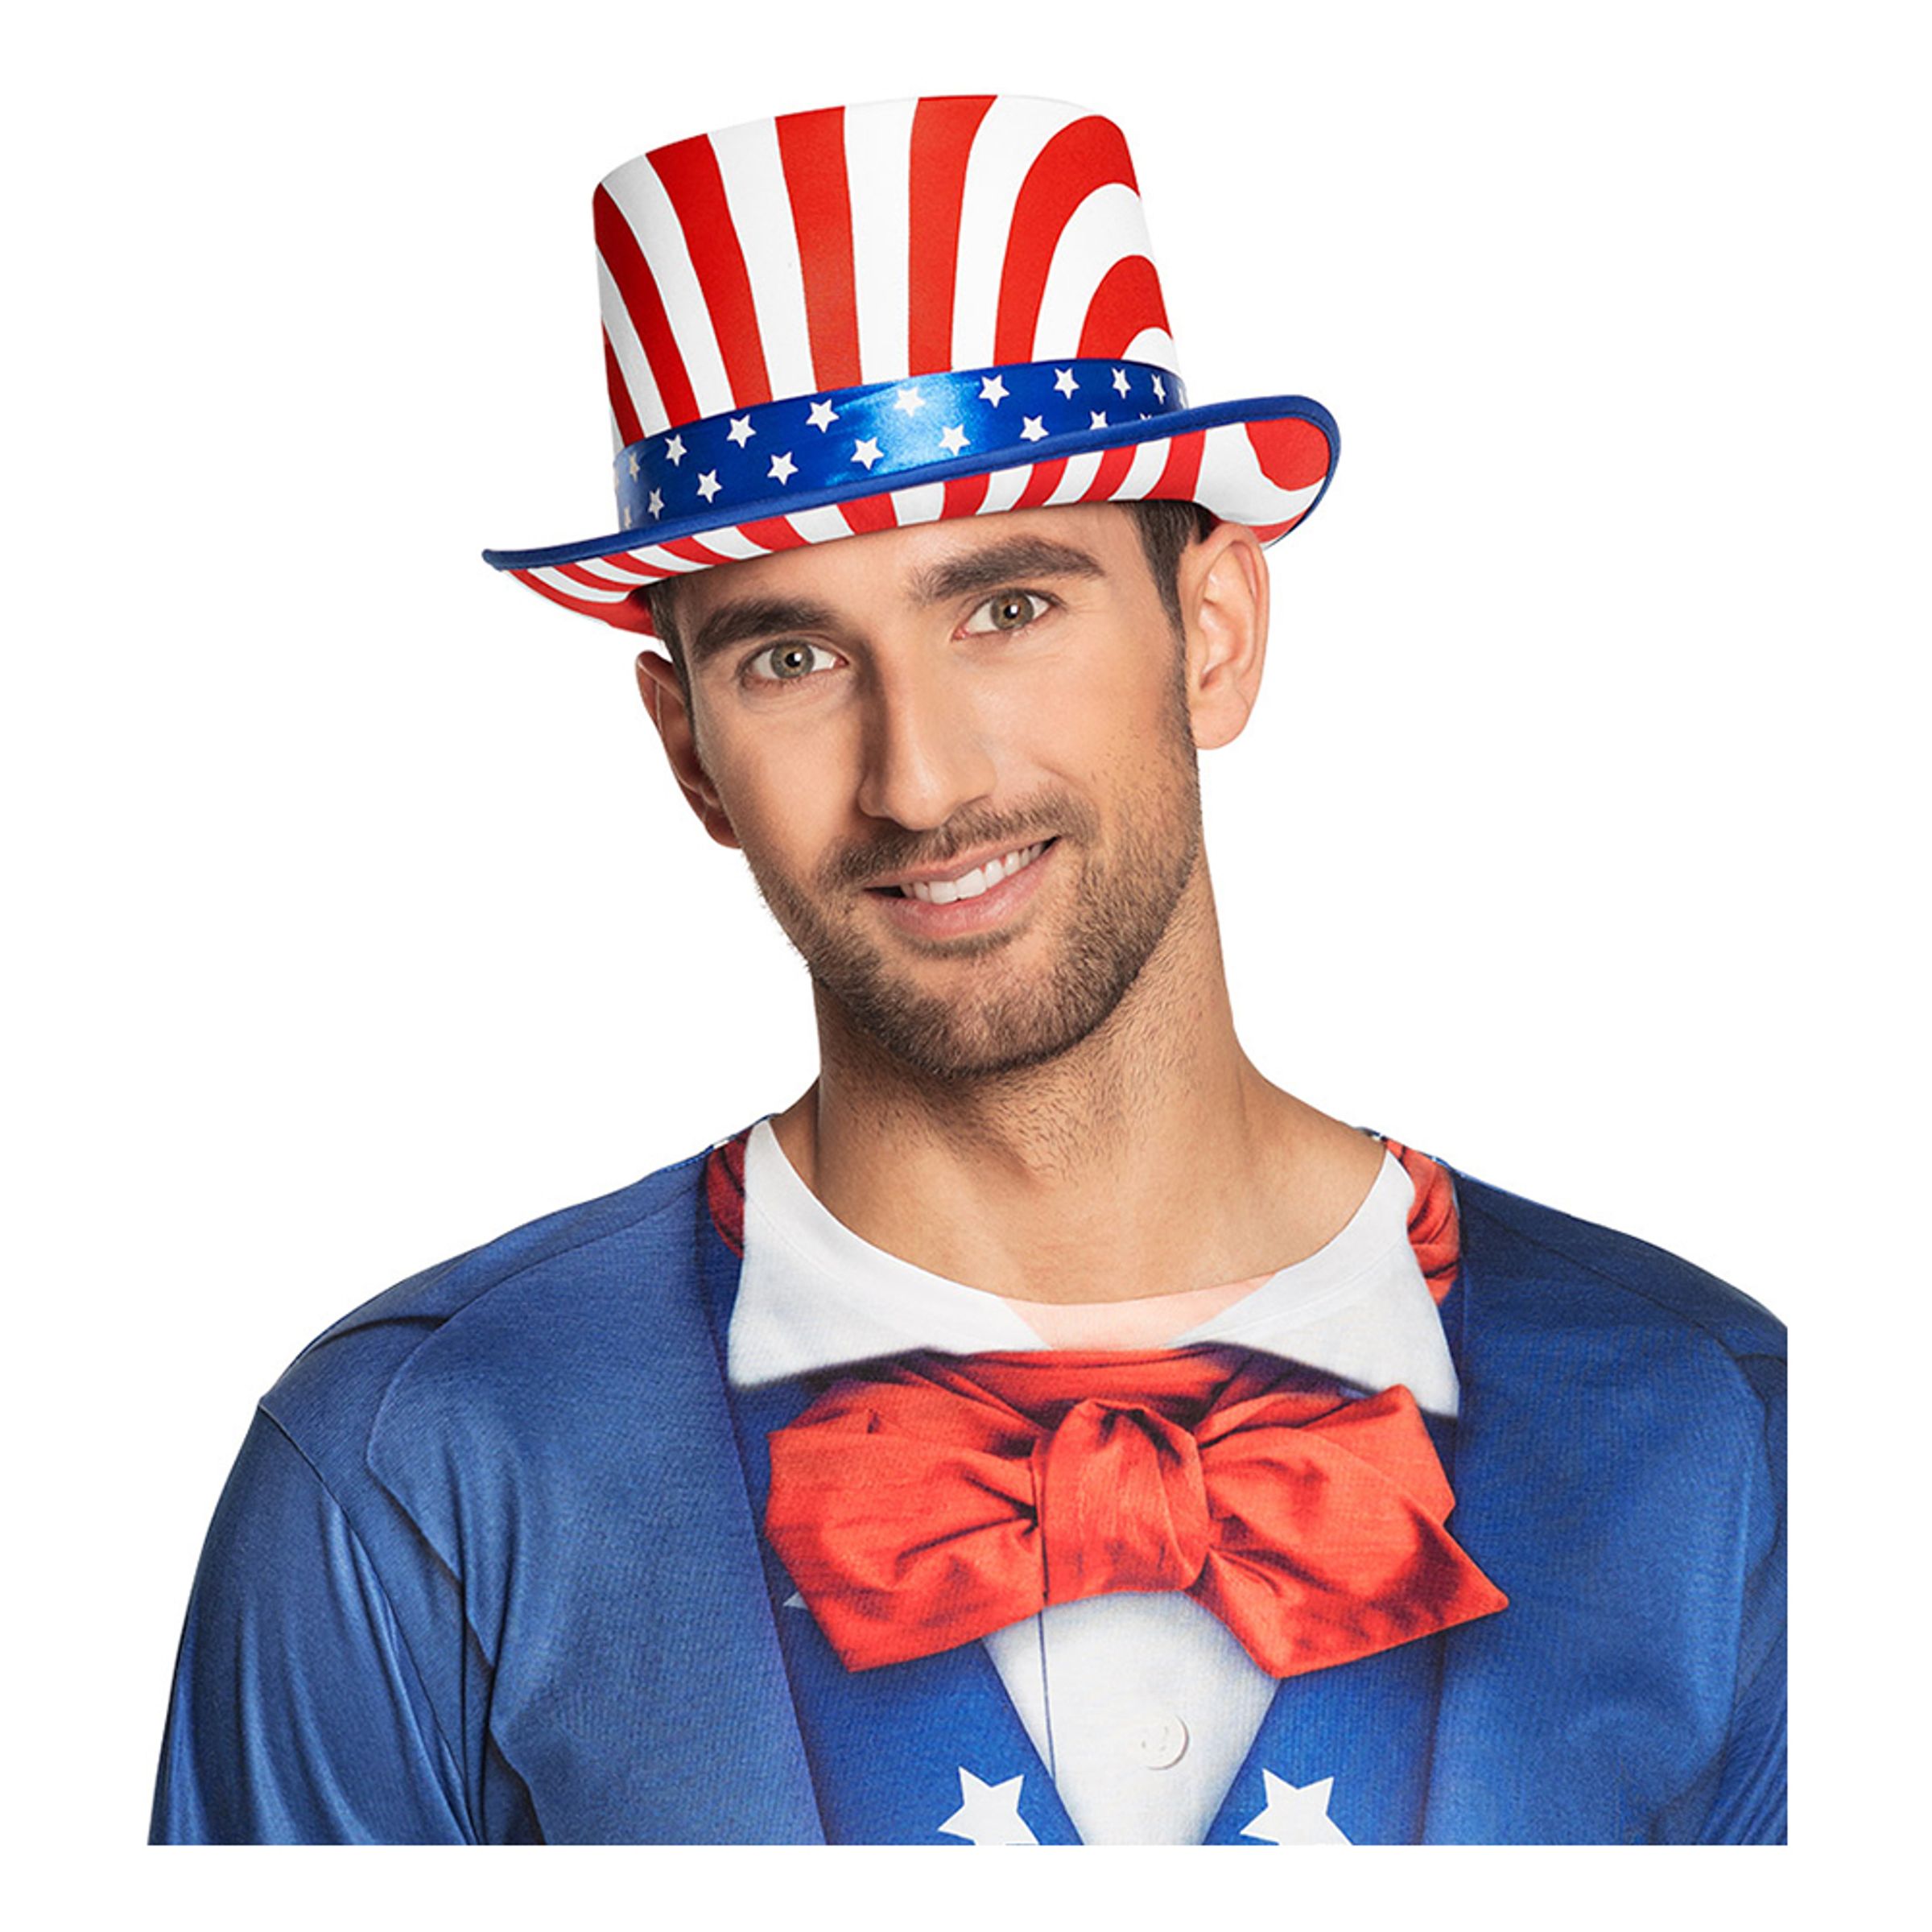 Hatt USA - One size